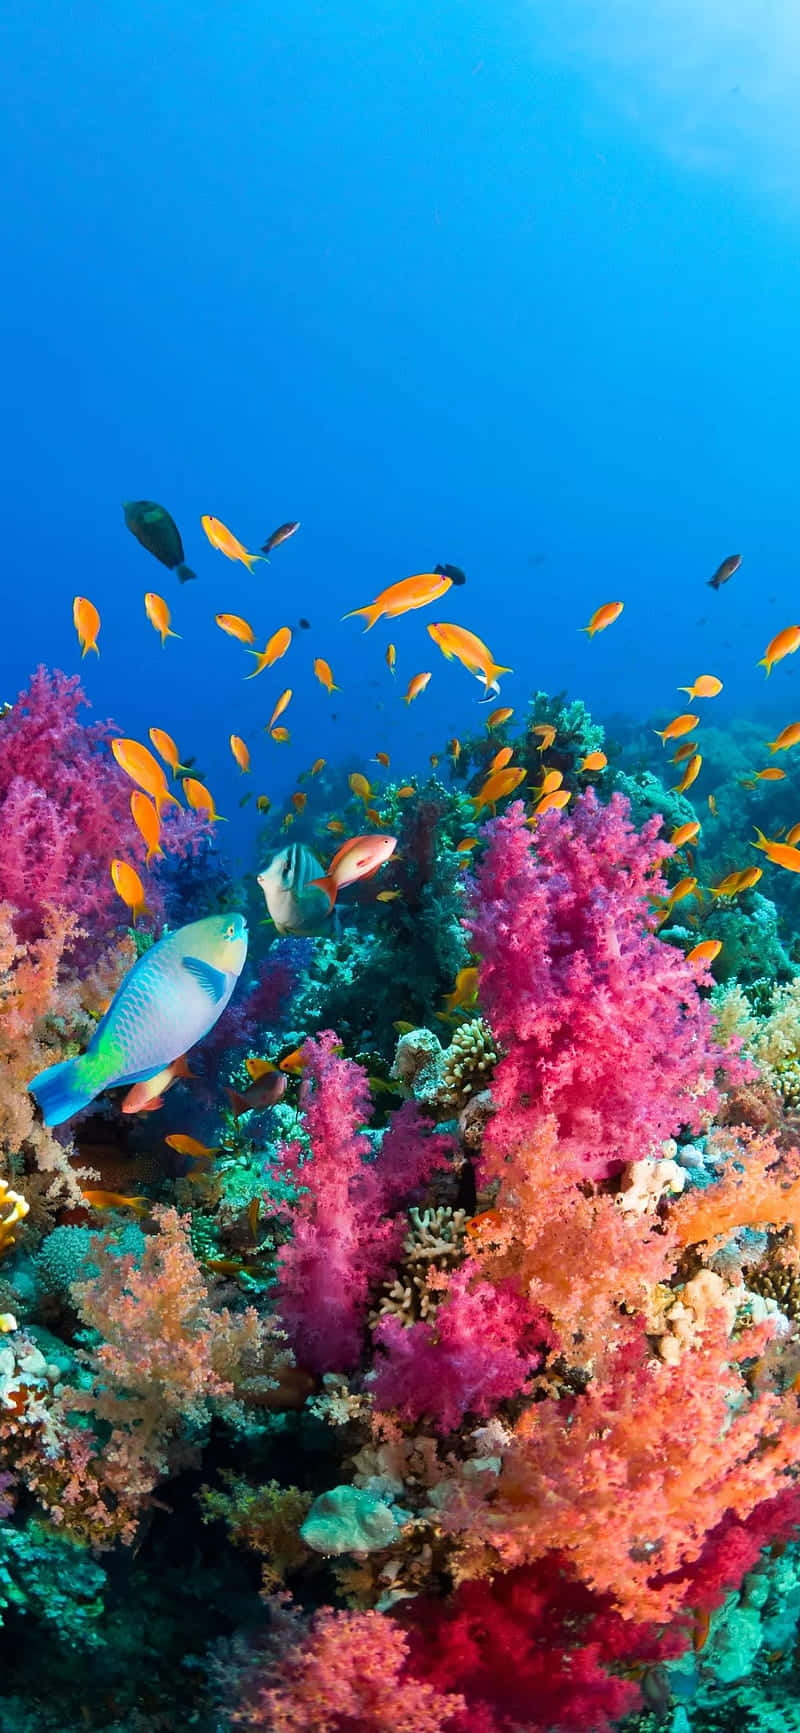 Vibrant Underwater Ecosystem Display on iPhone Wallpaper